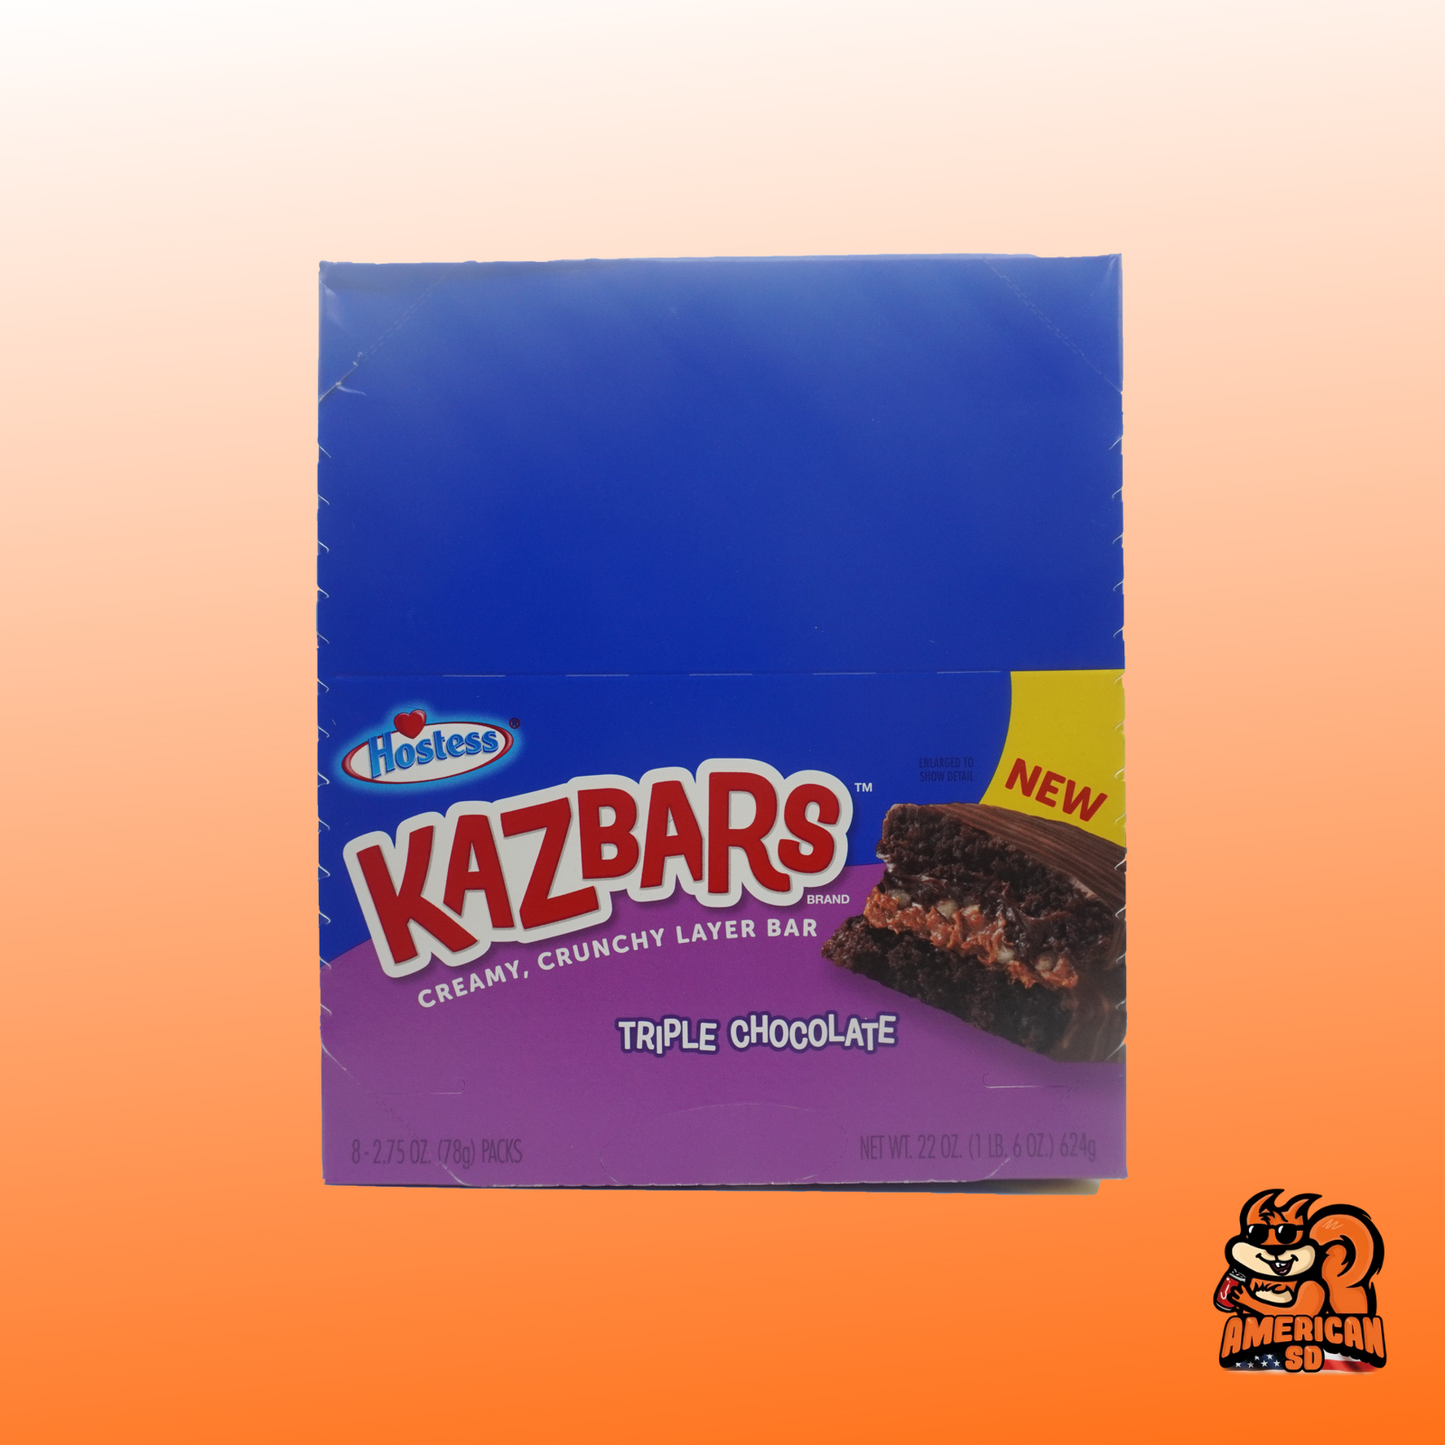 Hostess Kazbars Triple Chocolate 78g